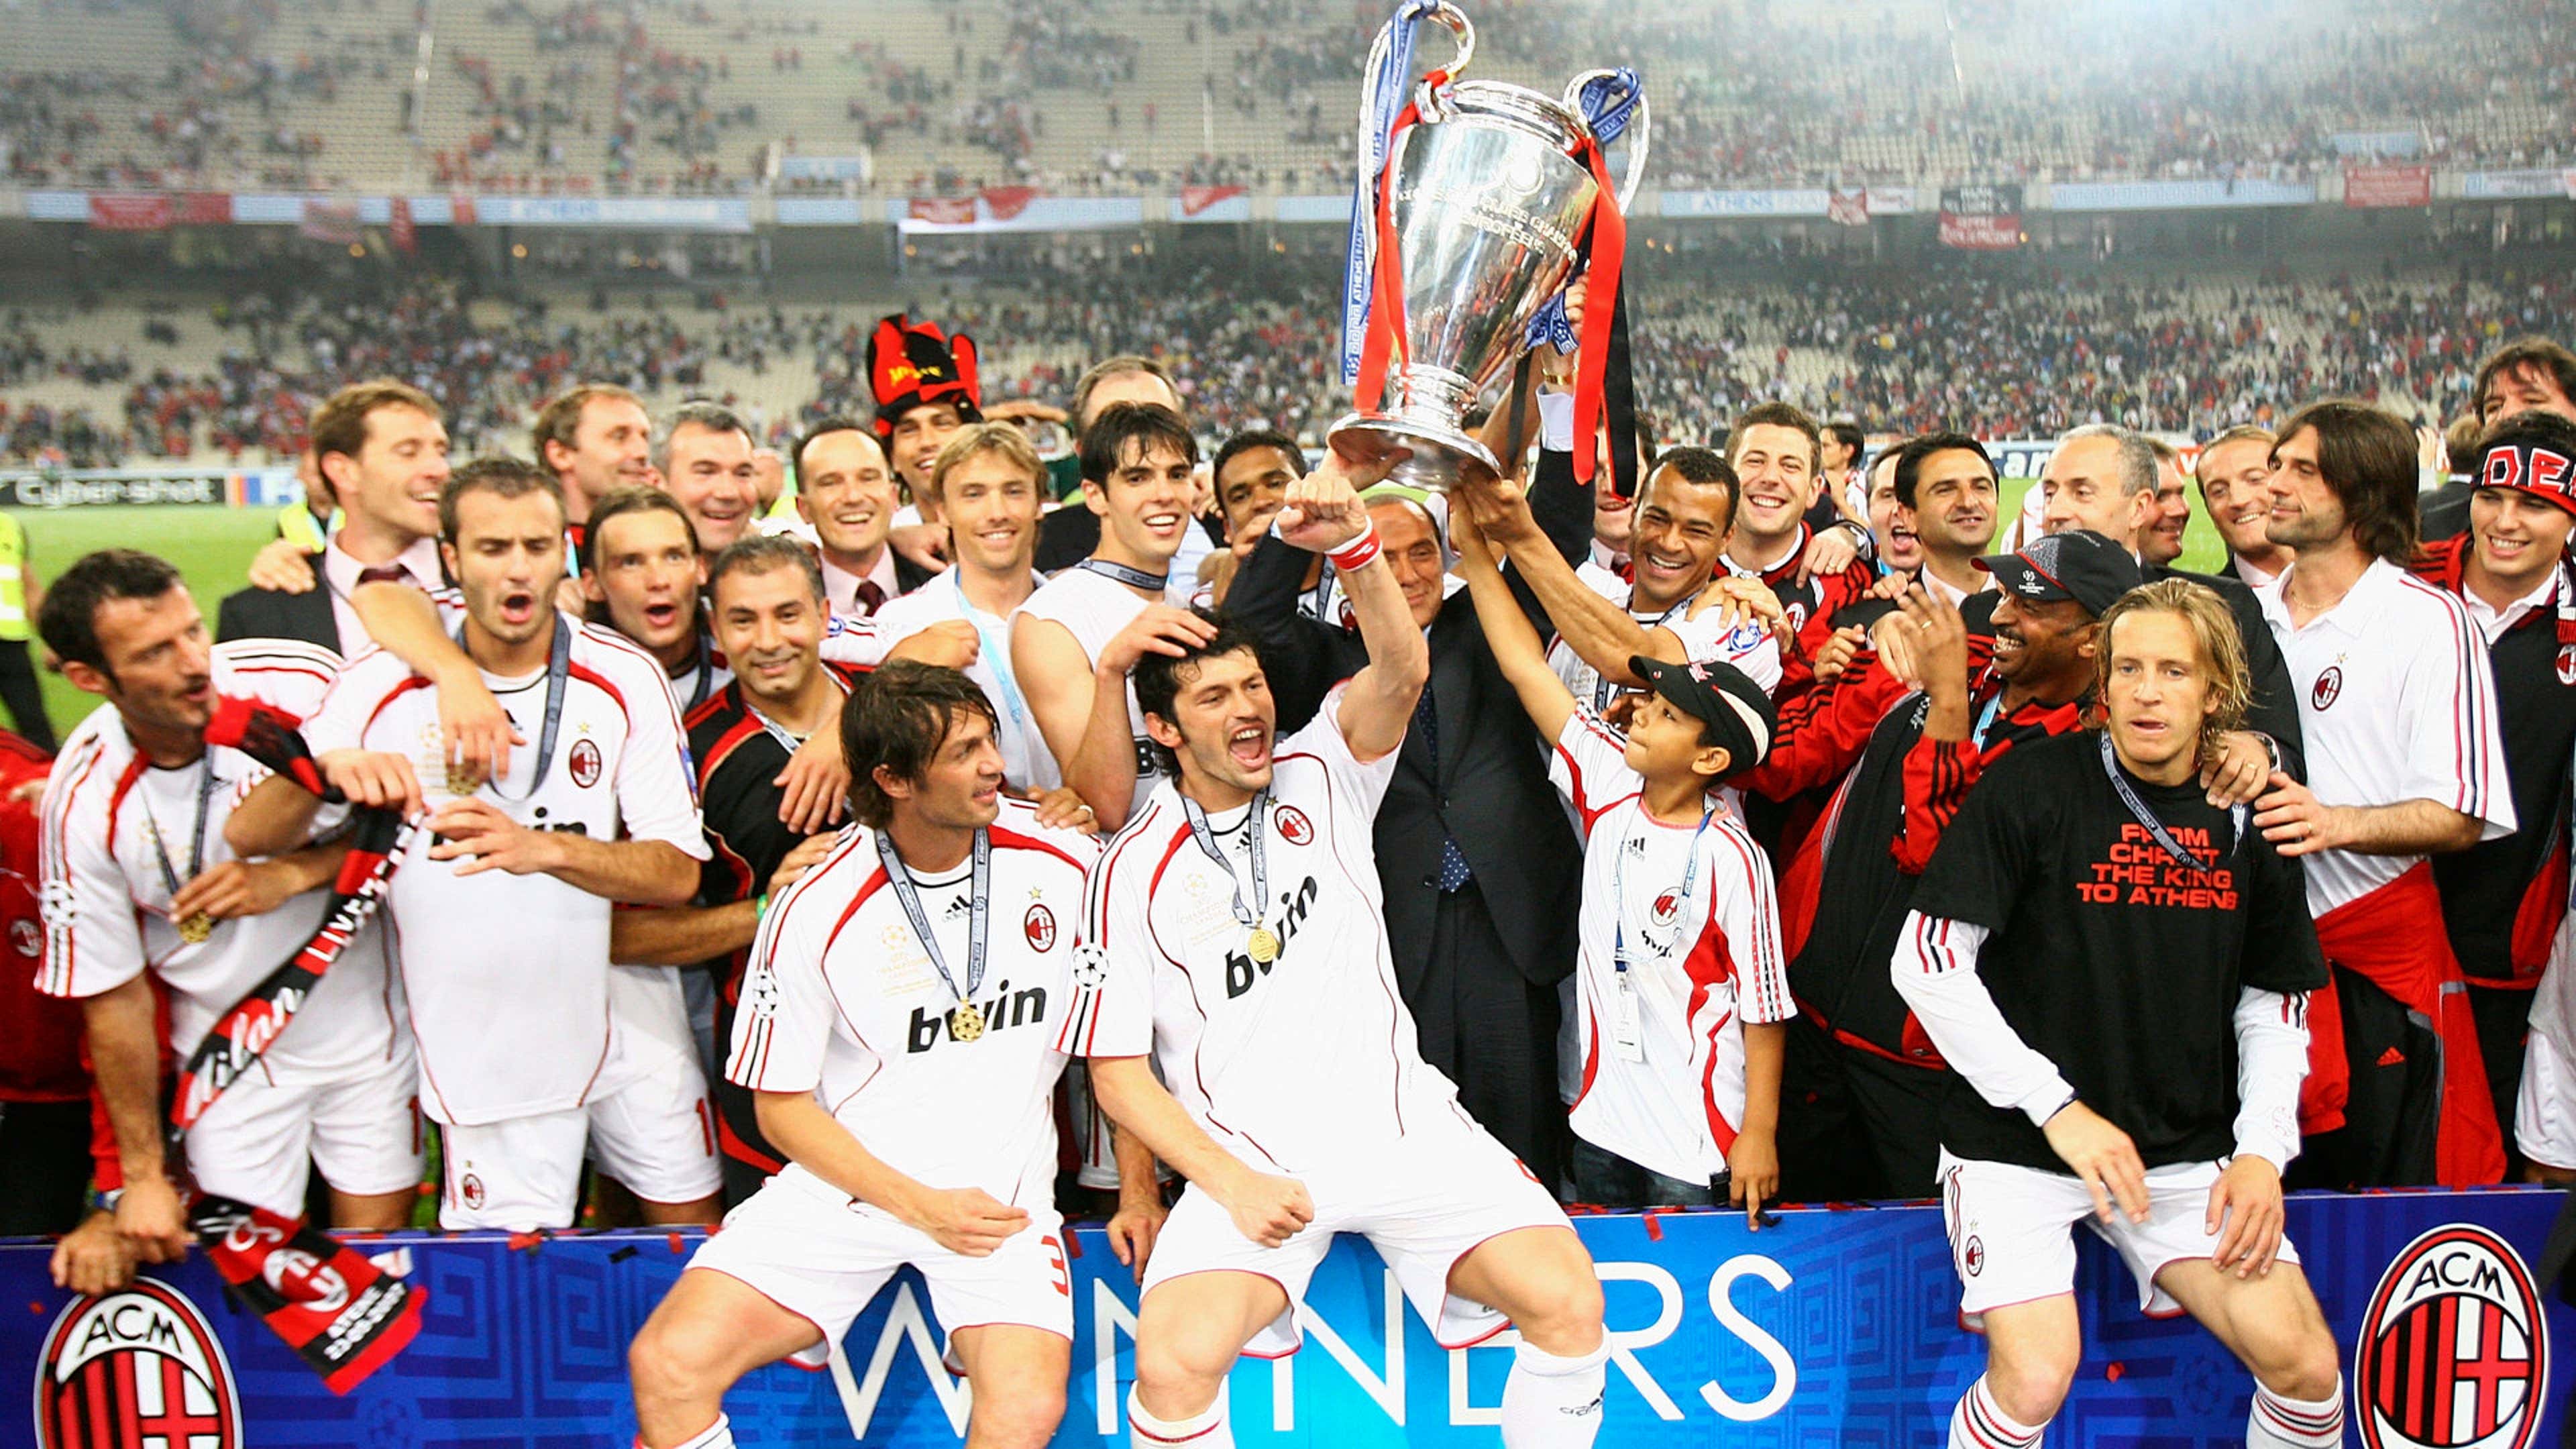 AC Milan 2007 Champions League final